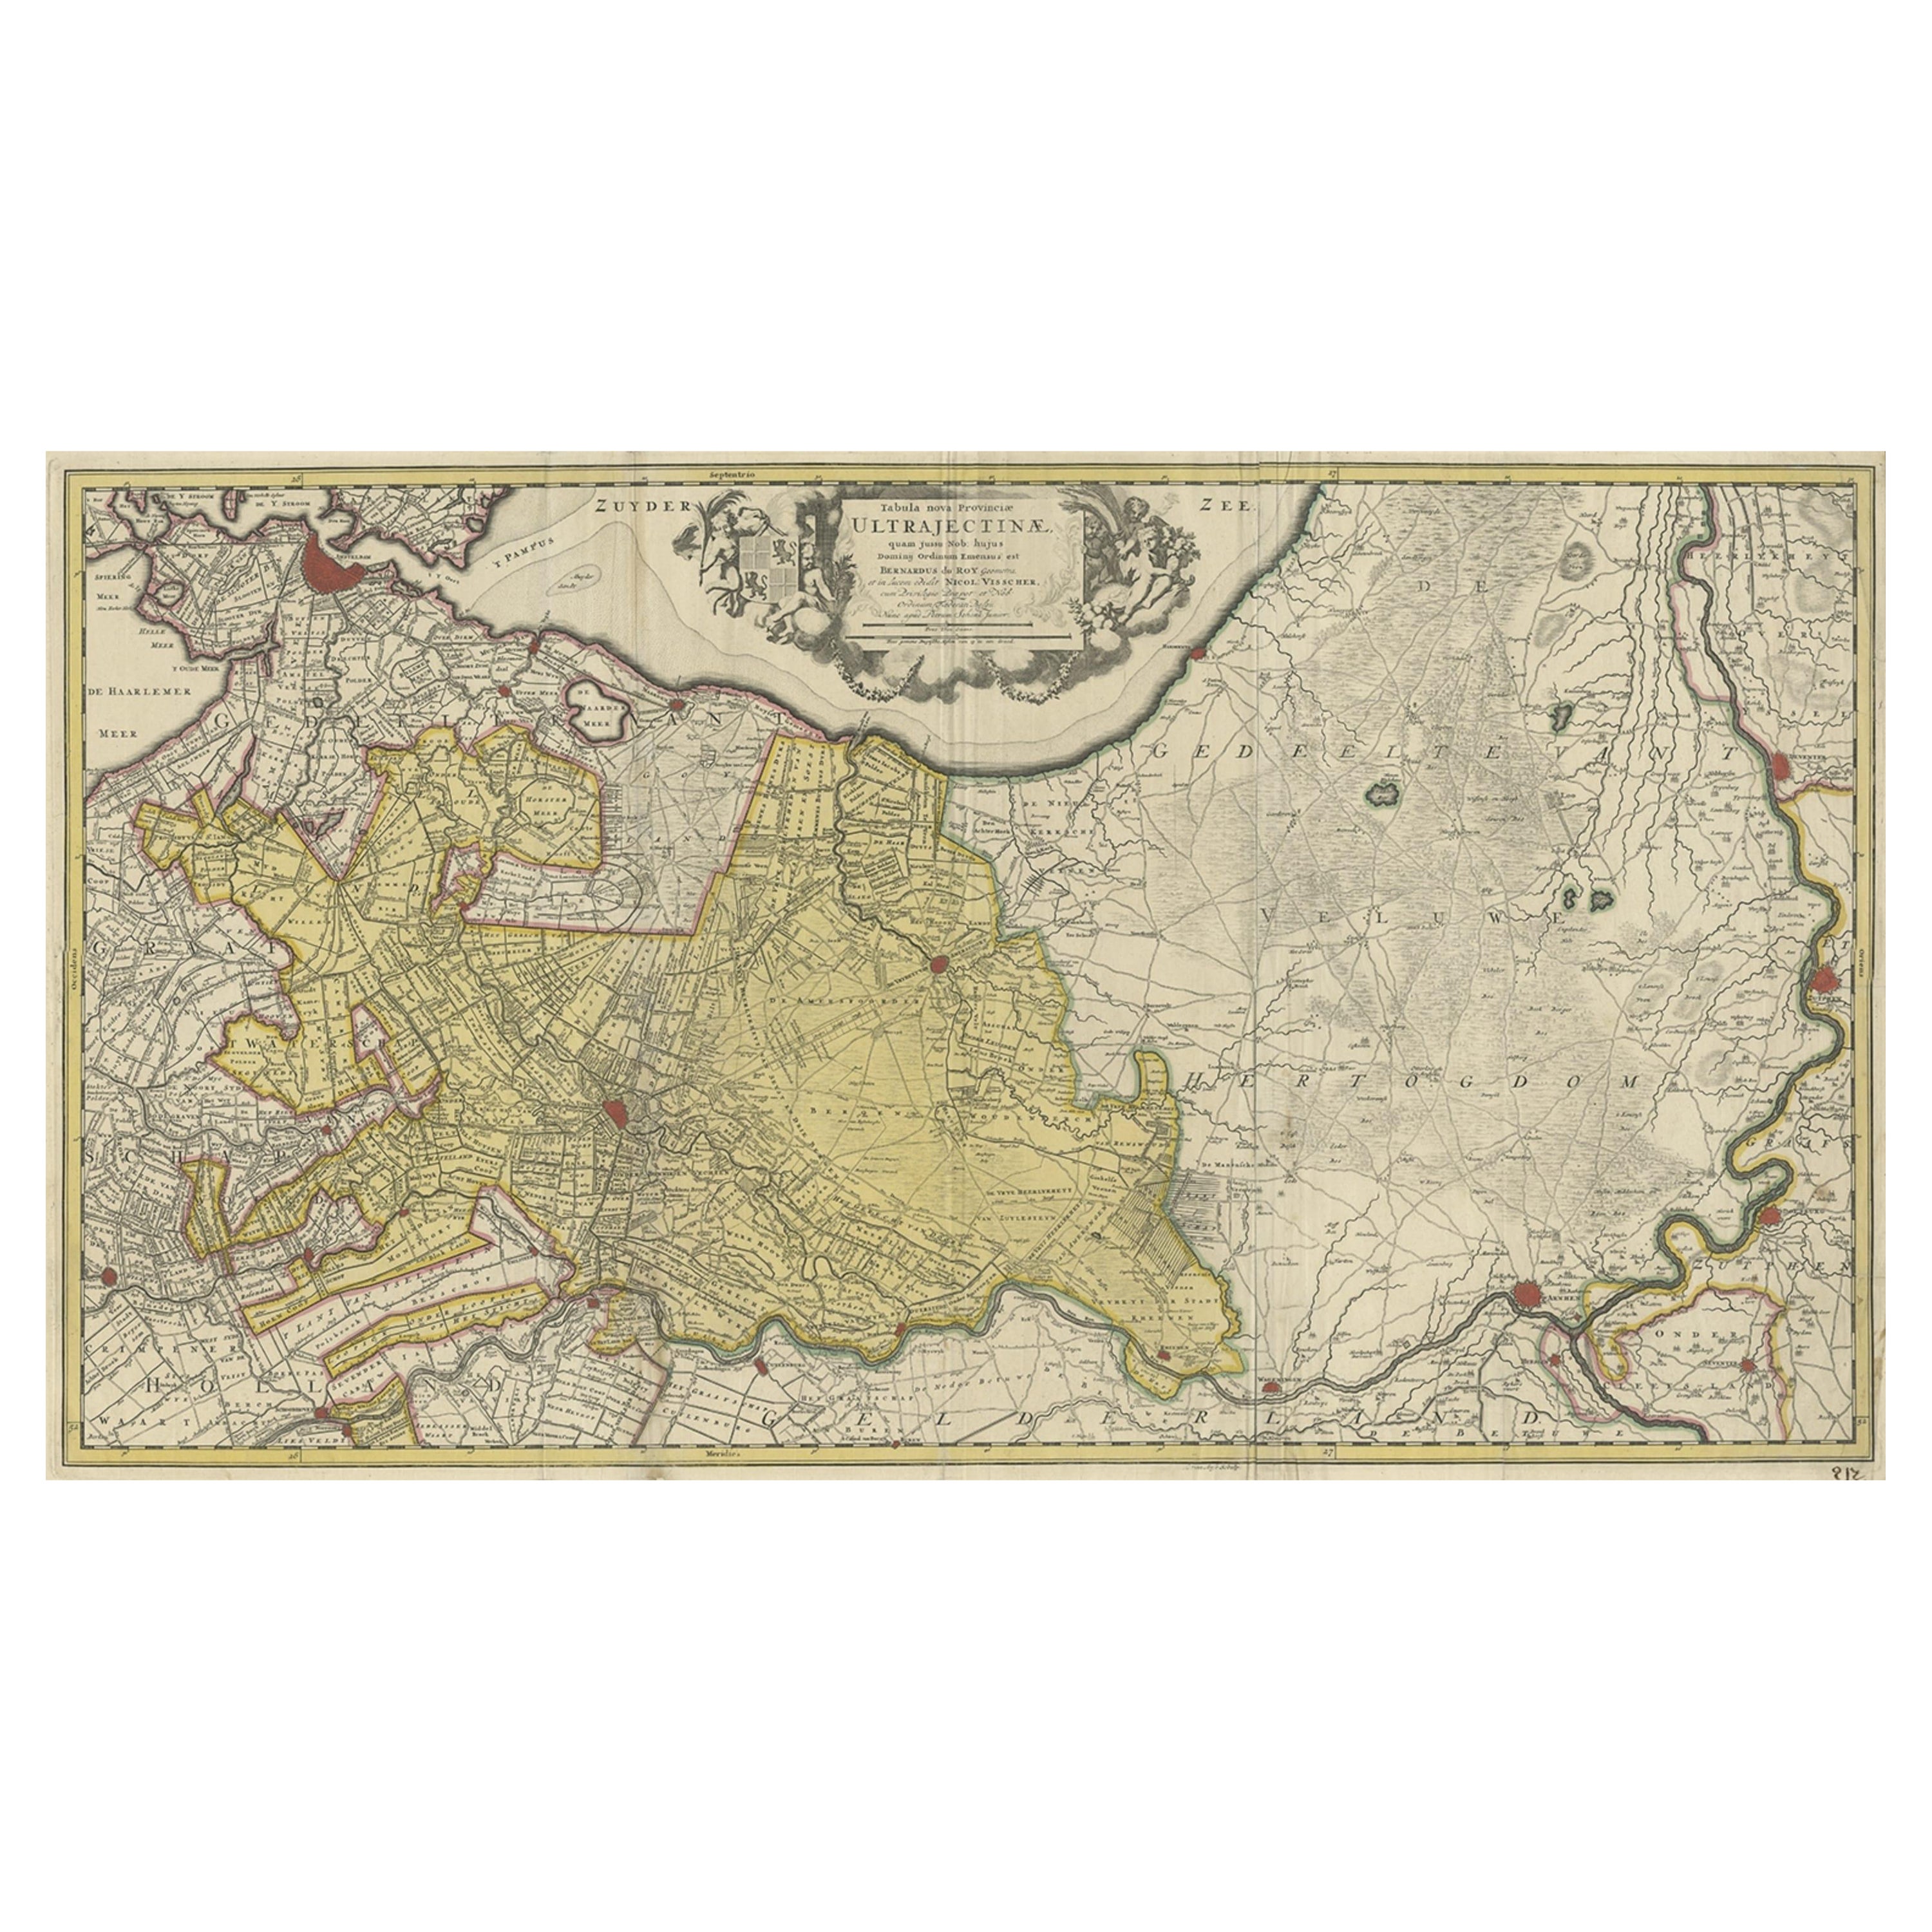 Original Antique Map of the Province of Utrecht, the Netherlands, ca.1720